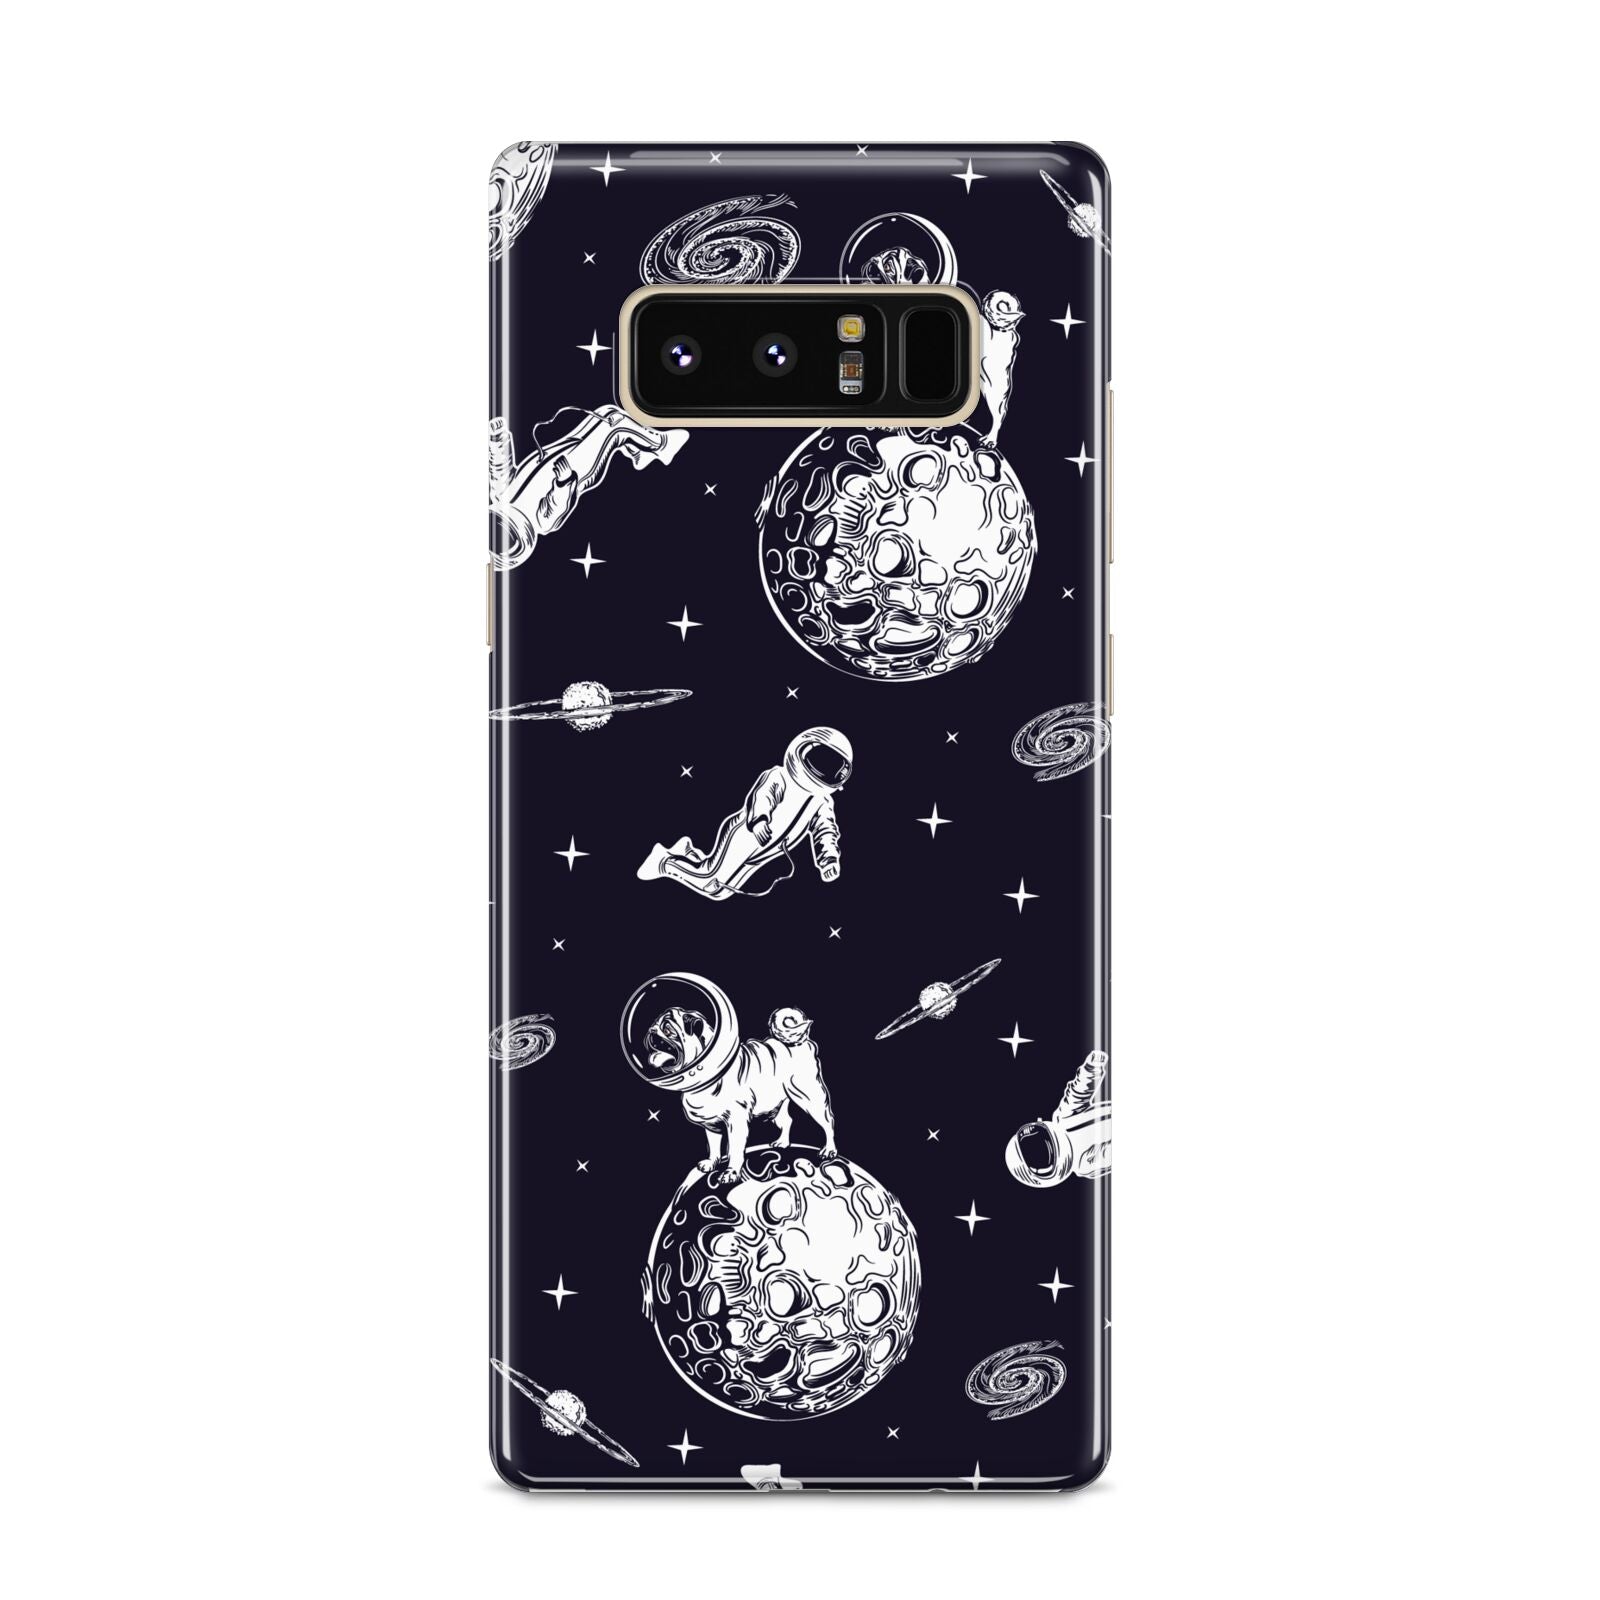 Pug in Space Samsung Galaxy S8 Case